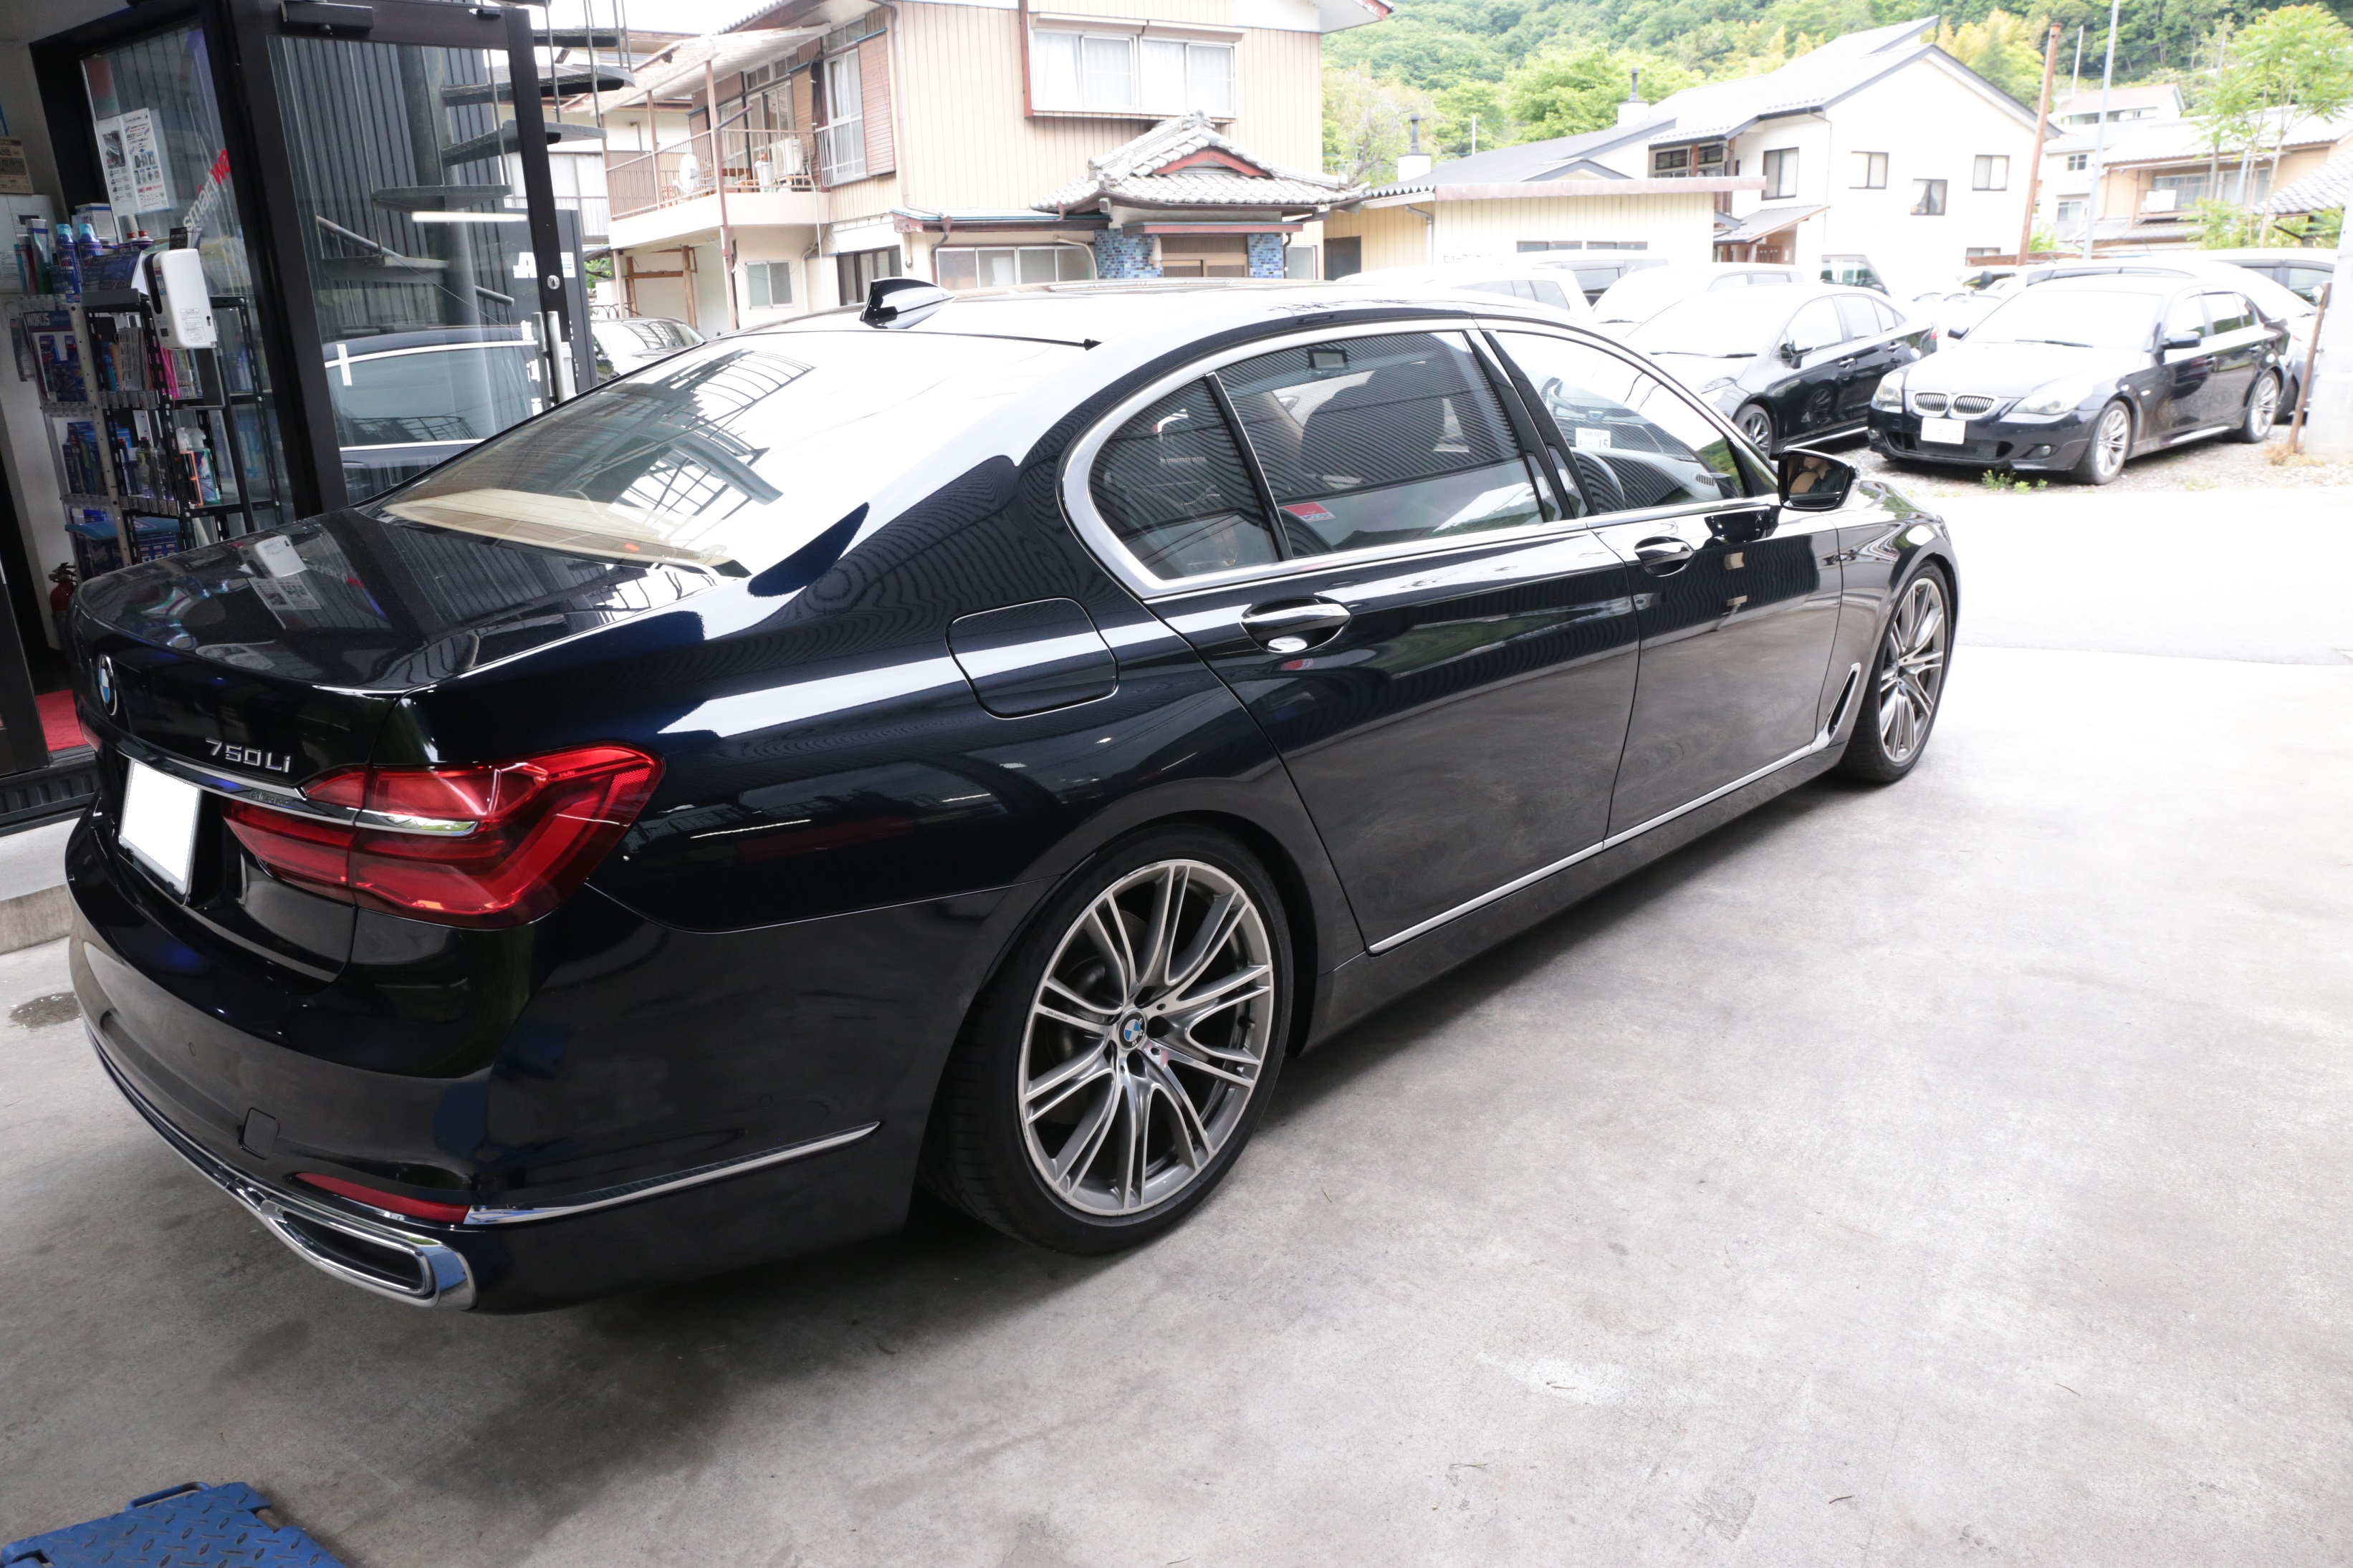 BMW 750Li インディヴィジュアル ７シリーズ 車高調整 コーディング バッテリー交換 オイル＆エレメント交換 群馬県 高崎市 |  高崎で輸入車修理 中古車売買 コーディングならBLAZE（ブレイズ）へ│BLAZE Total Car Support u0026 Modify in  Takasaki Gunma